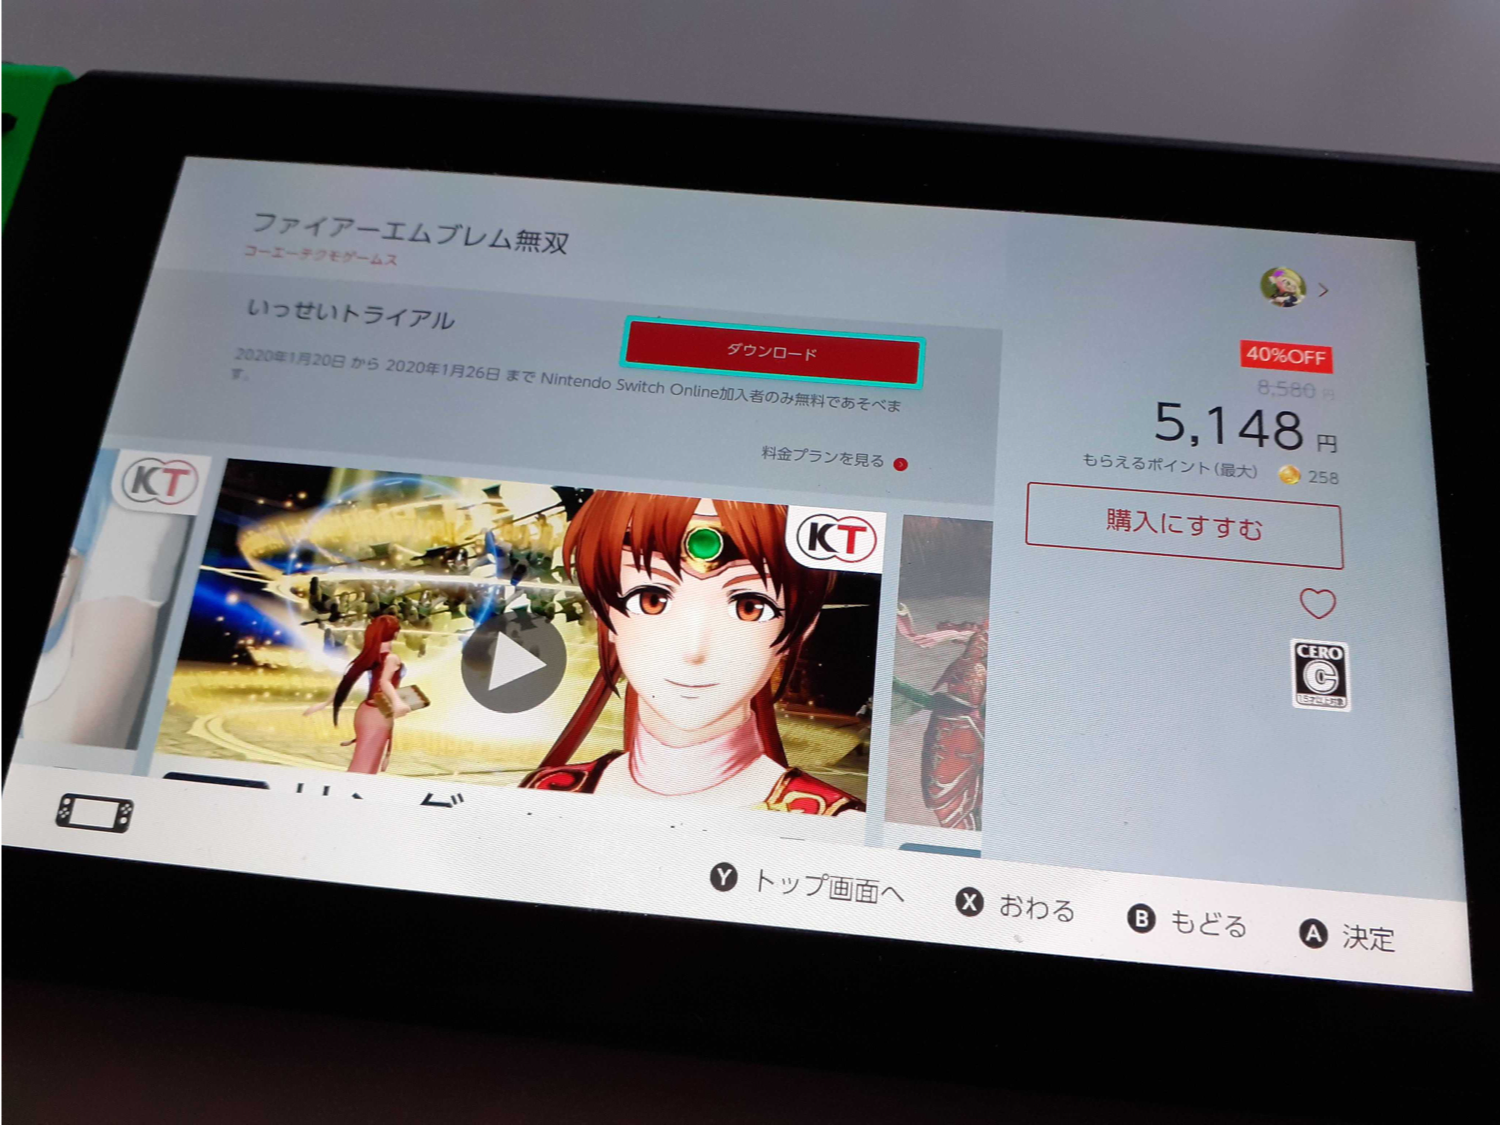 Free Fire En Nintendo Switch : Nintendo Switch Great Role Playing Games Nintendo Game Store ...